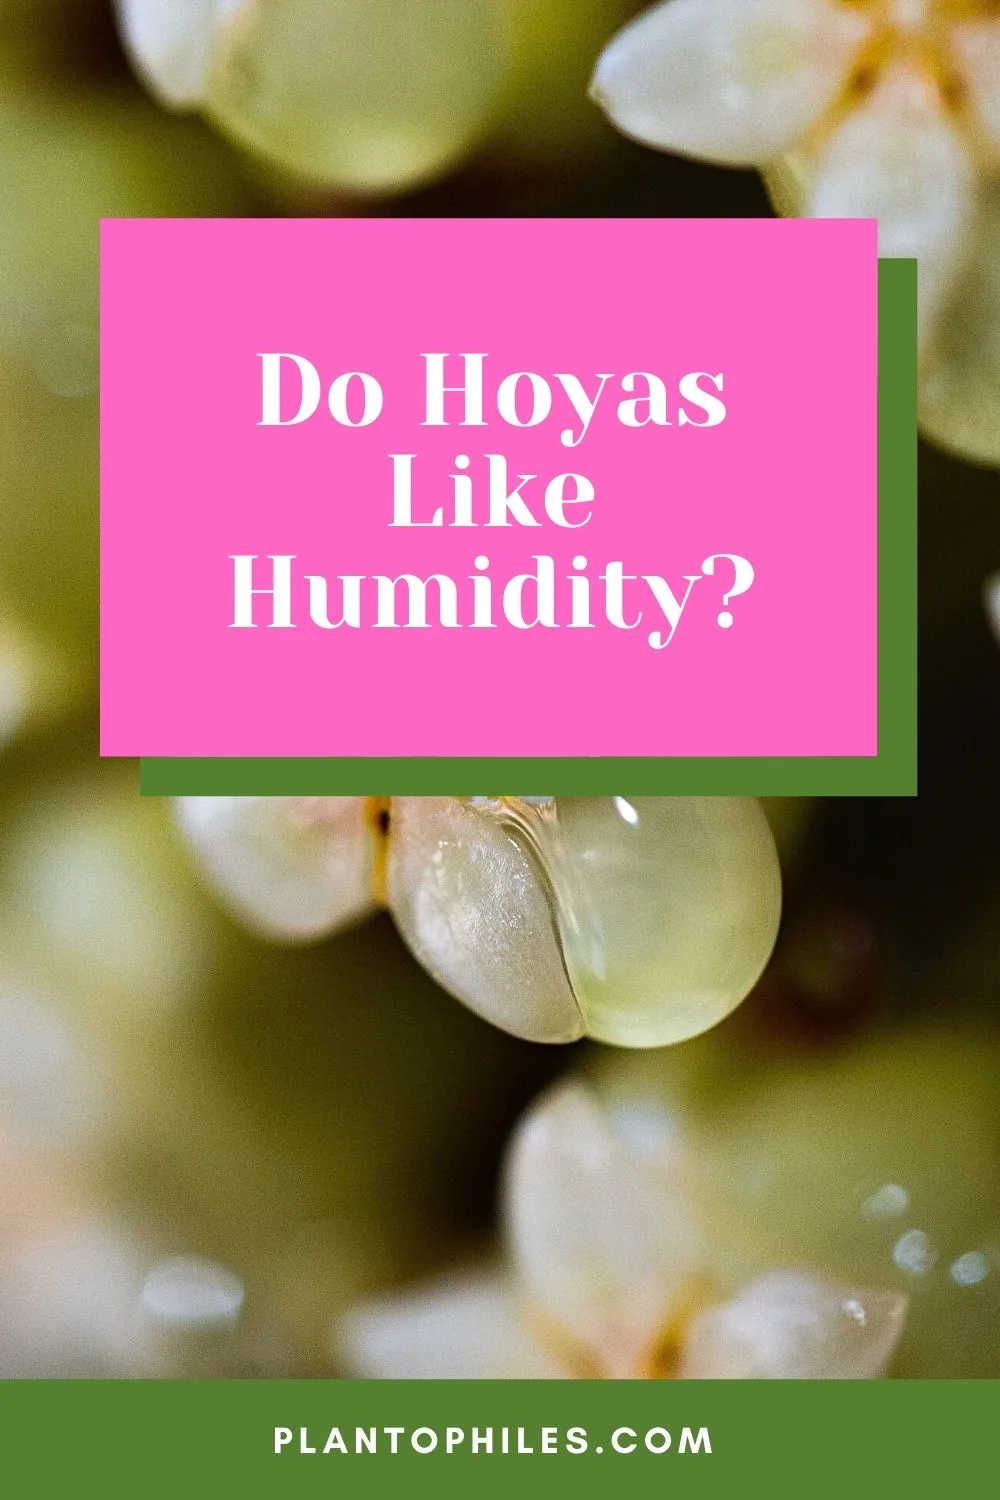 Do Hoyas Like Humidity?